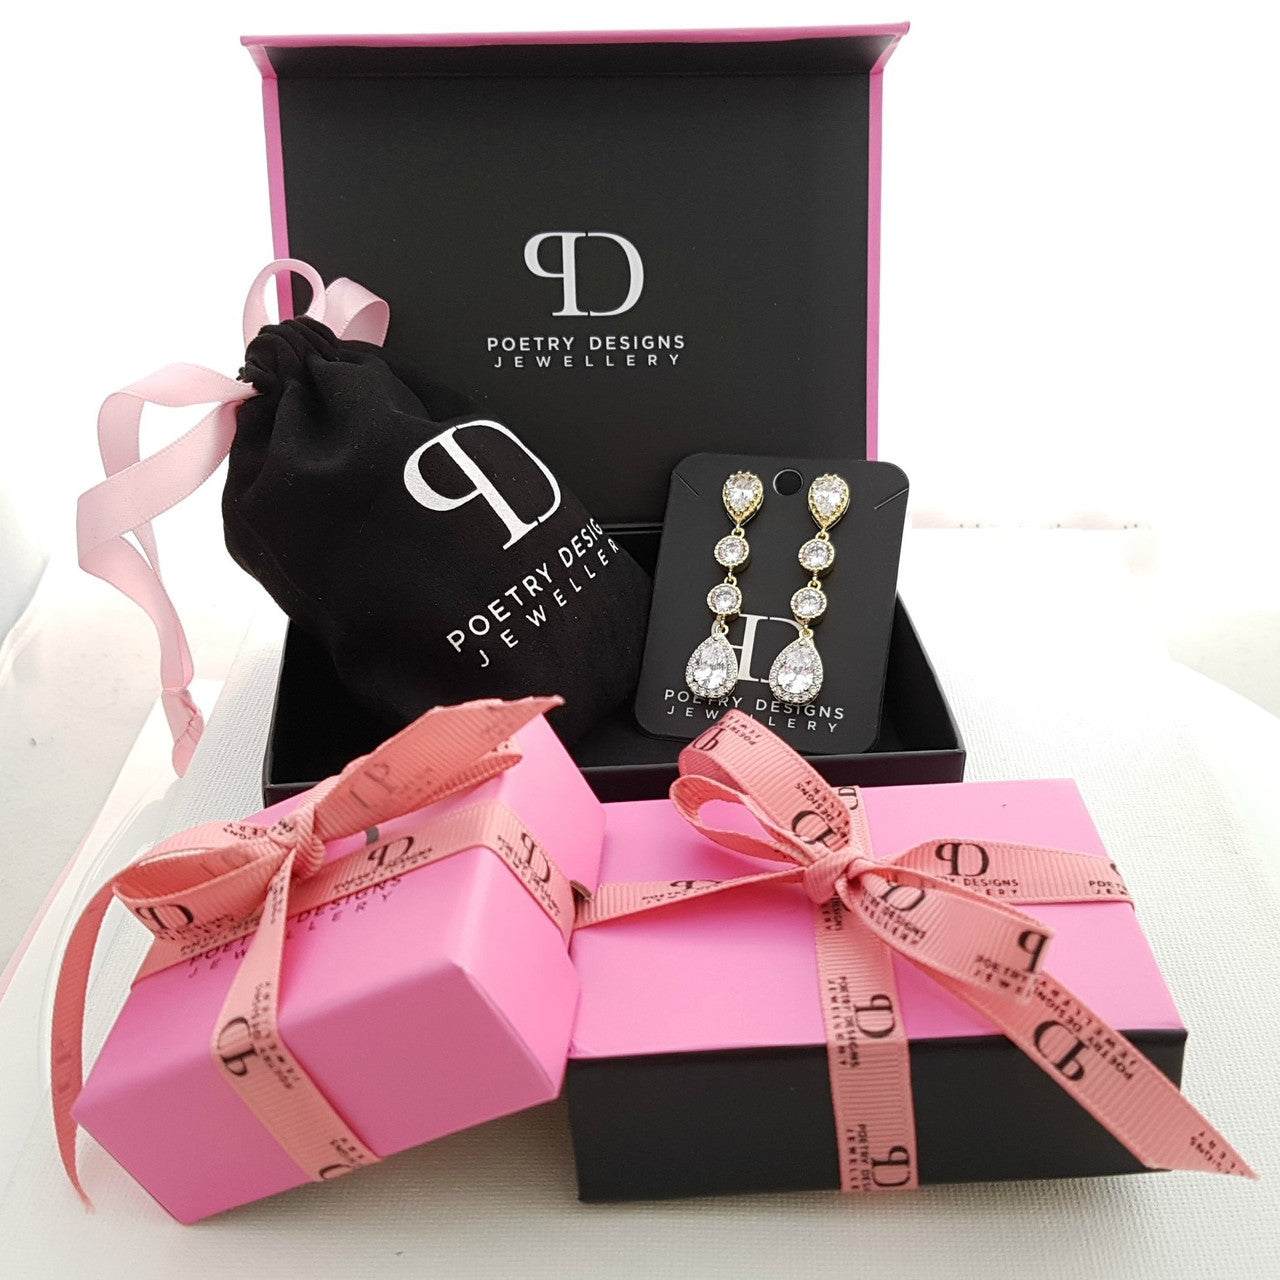 Poetry Designs Packaging for Wedding Day Crystal Bracelet in Rose Gold for Brides